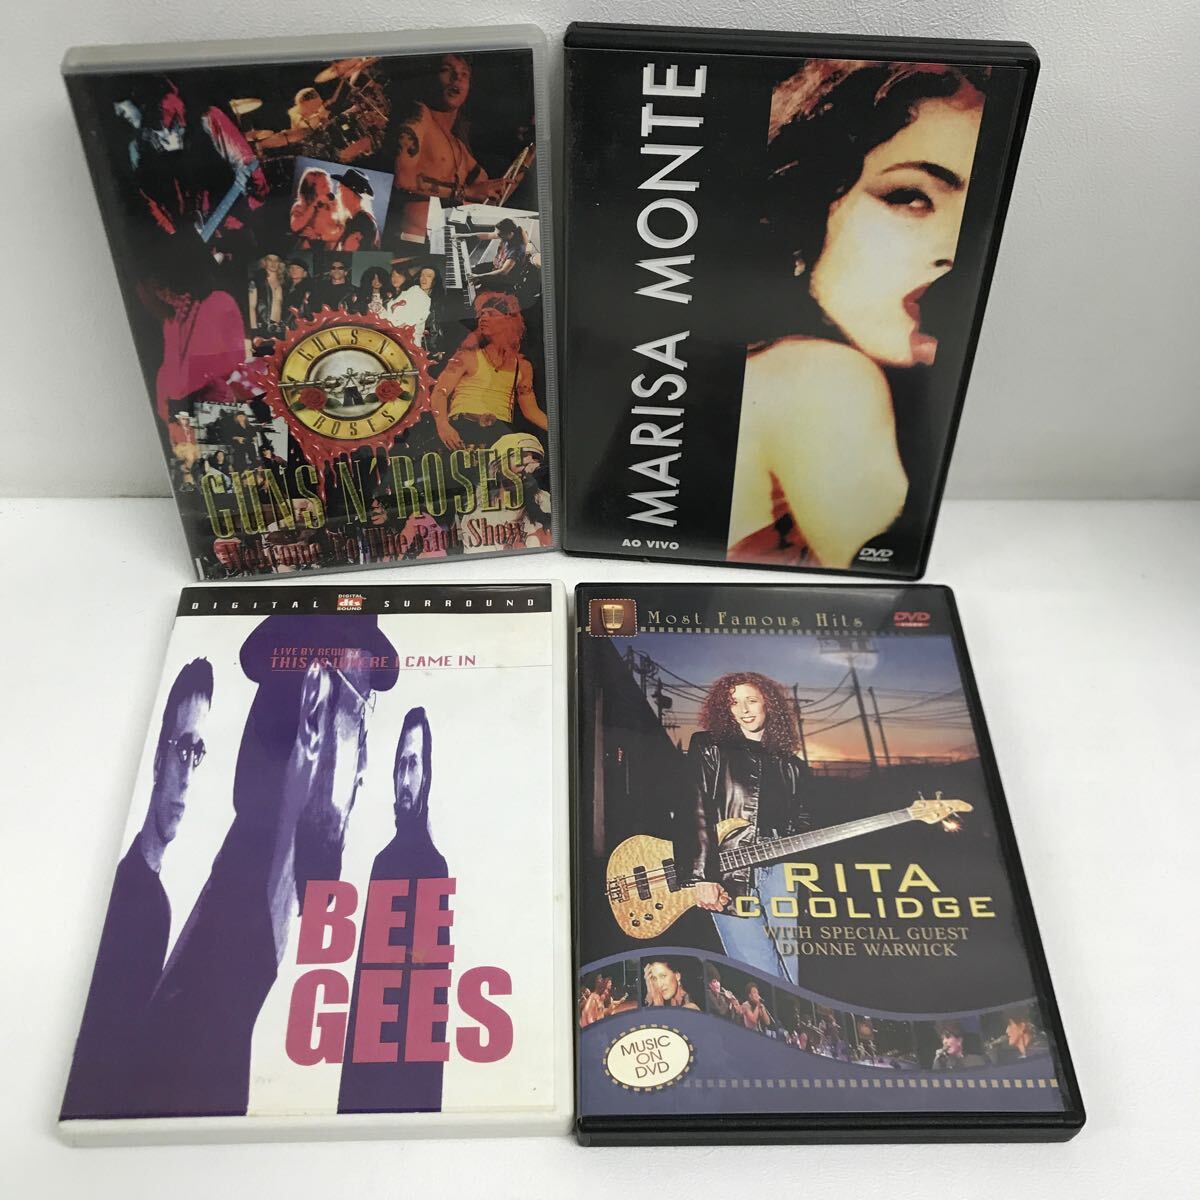 I0427B3 summarize * import version western-style music DVD 28 volume set music Region Free / Beatles / Eric *klap ton /biyonse other 